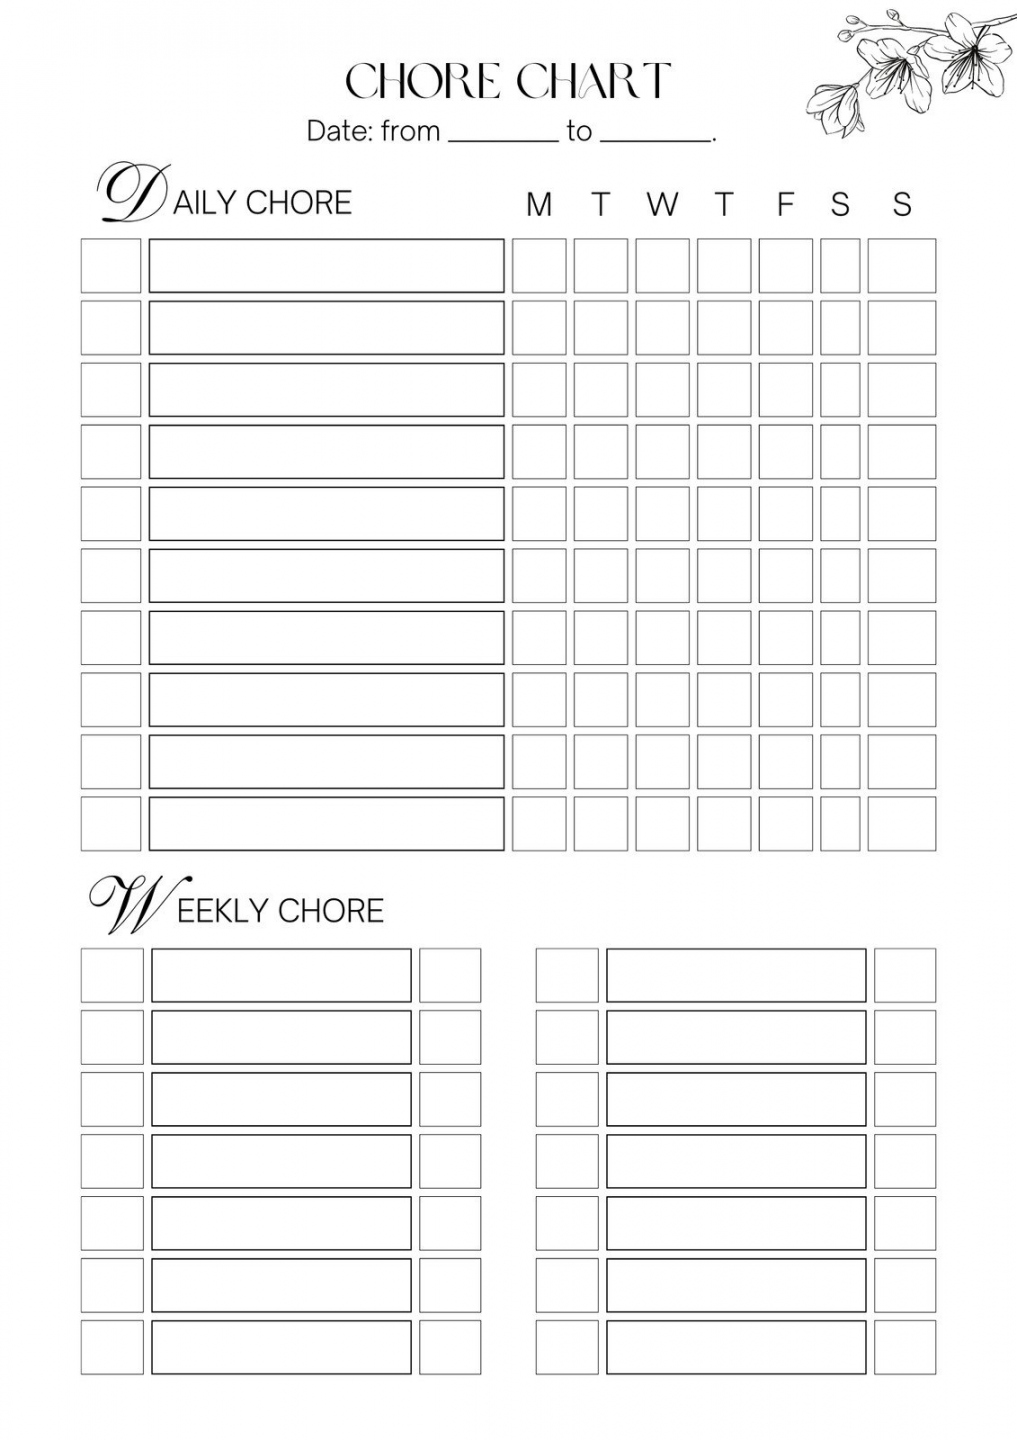 Free Editable Printable Chore Charts - Printable - Free customizable chore chart templates to print  Canva